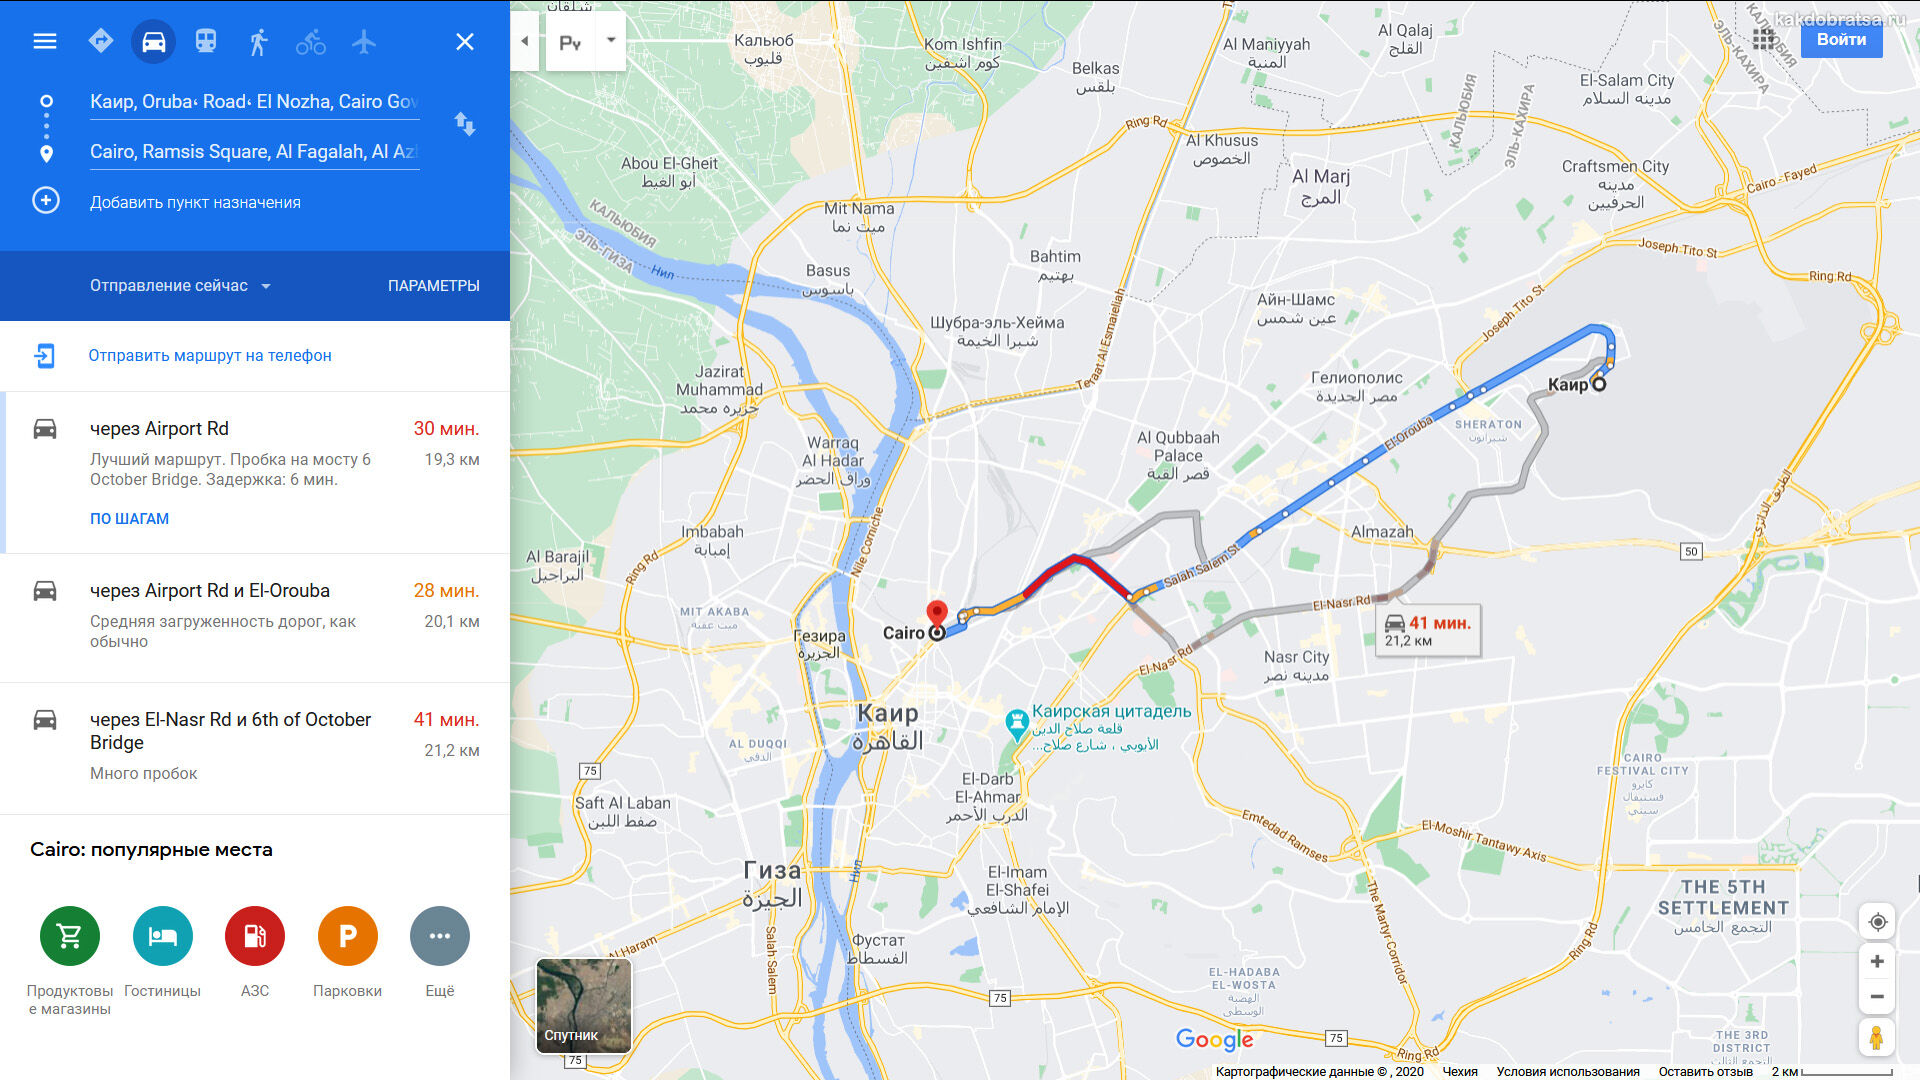 Жд вокзал Каира на карте и расстояние до аэропорта